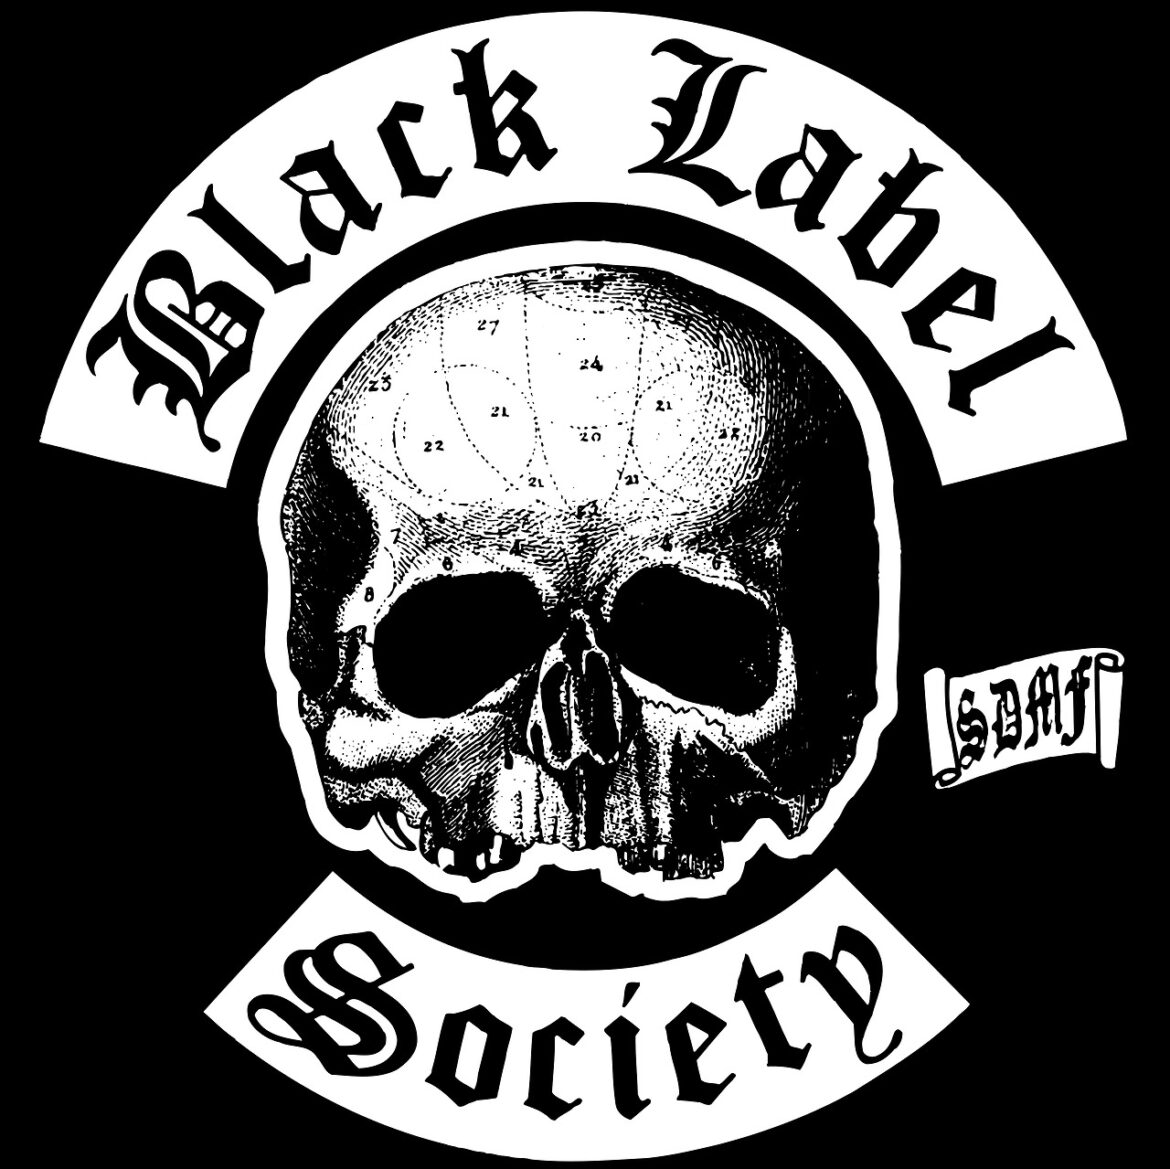 BLACK LABEL SOCIETY – Working On New Album